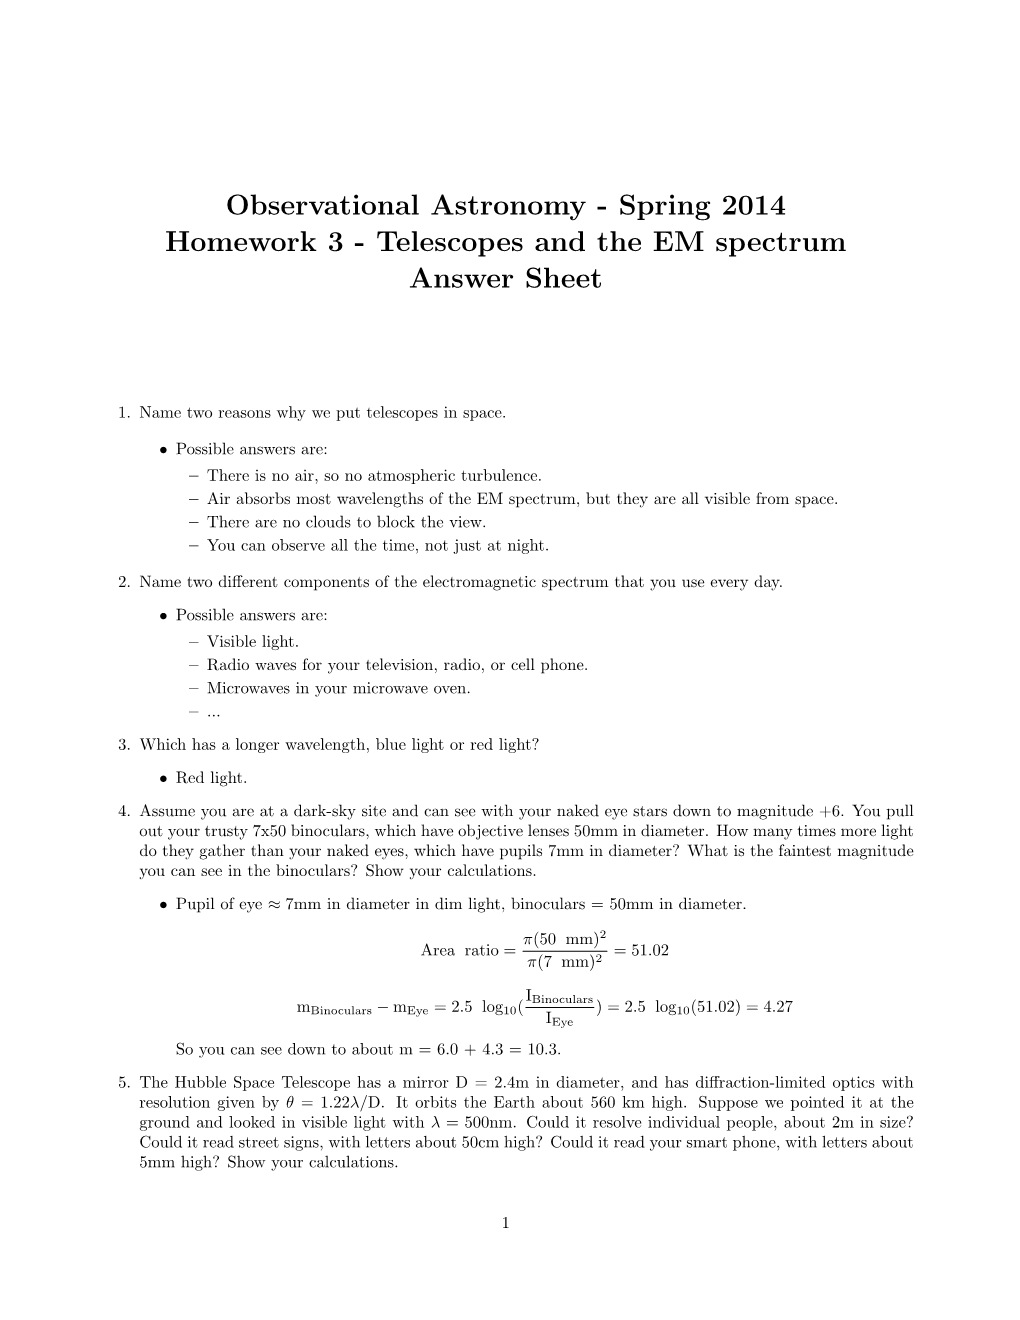 Spring 2014 Homework 3 - Telescopes and the EM Spectrum Answer Sheet